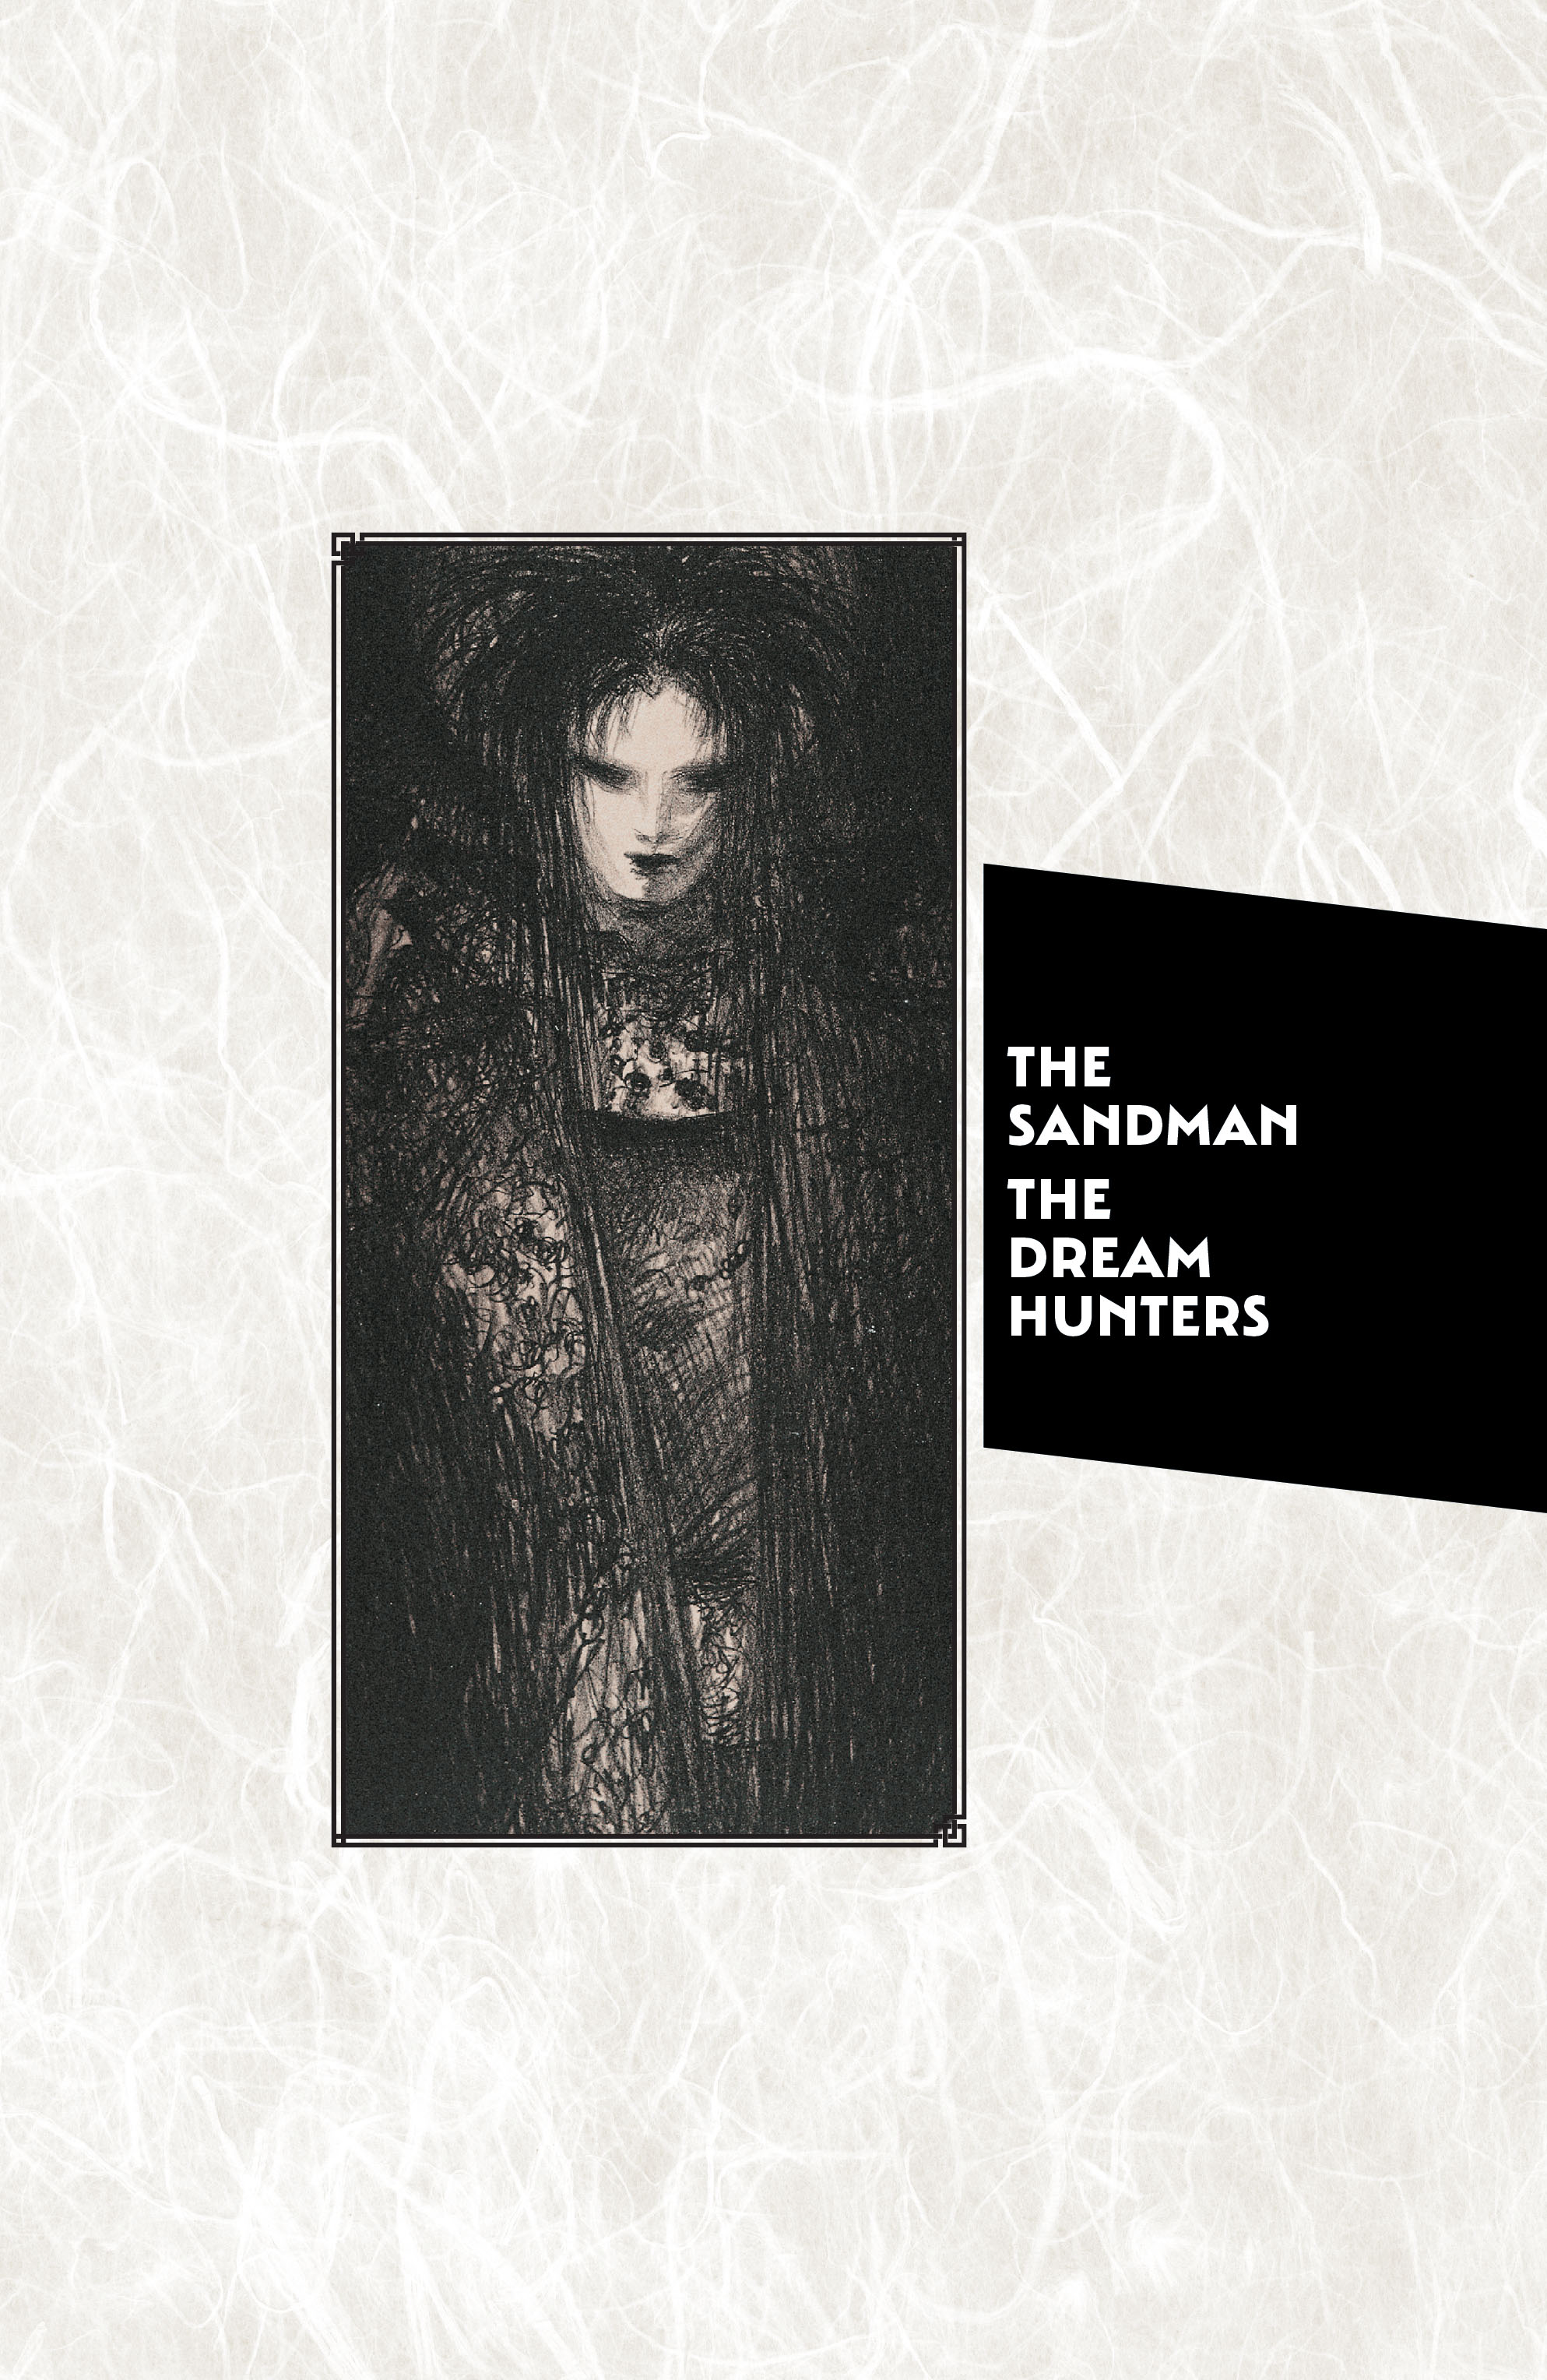 Read online The Sandman: The Dream Hunters comic -  Issue # _30th Anniversary Edition - 2